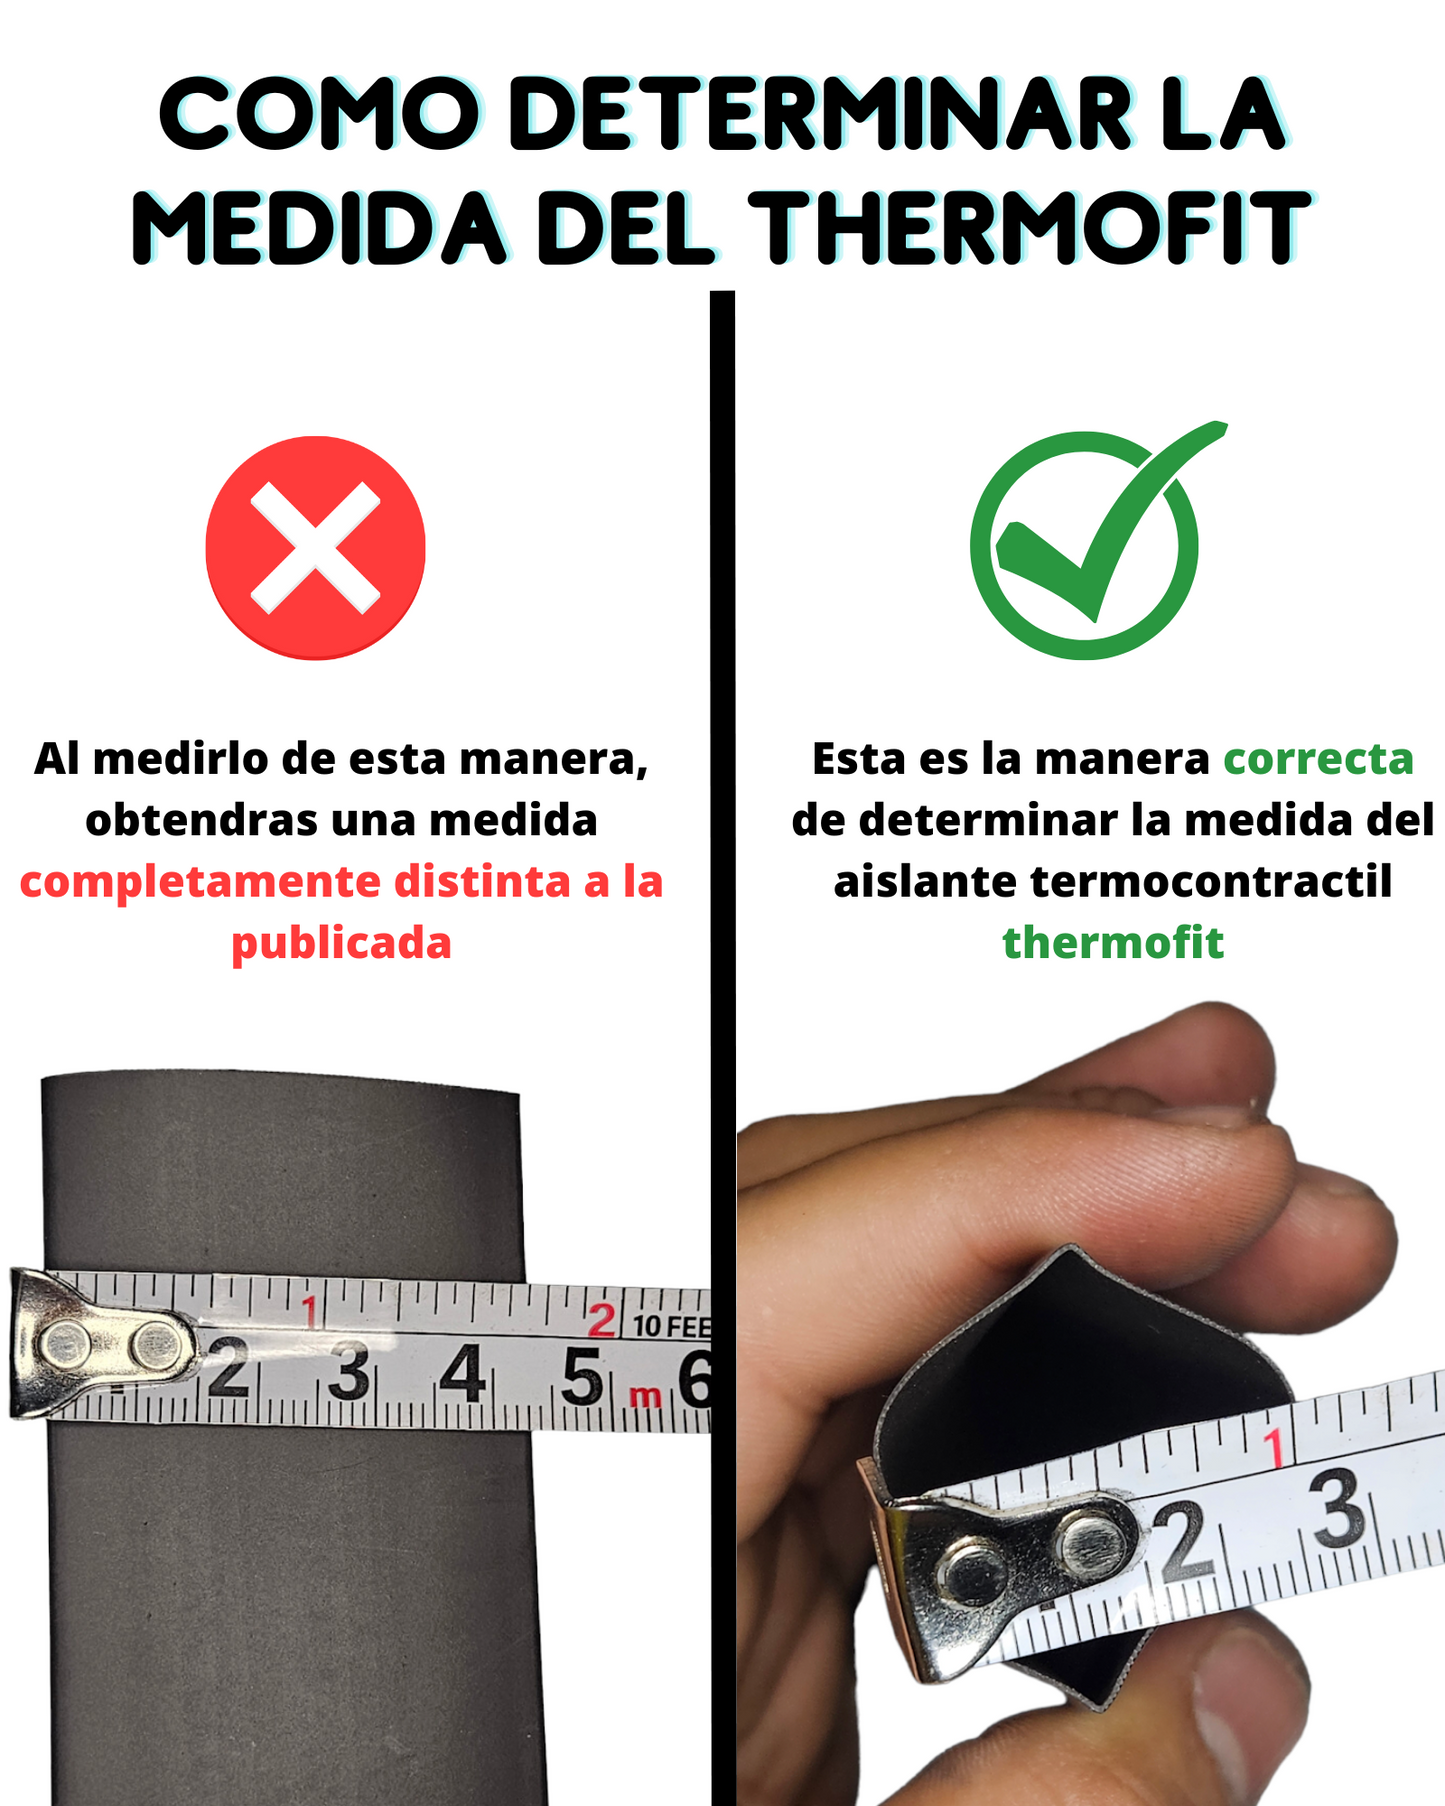 Tubo aislante termo contráctil thermofit 1 1/2" | Termo encogido termofit 38mm